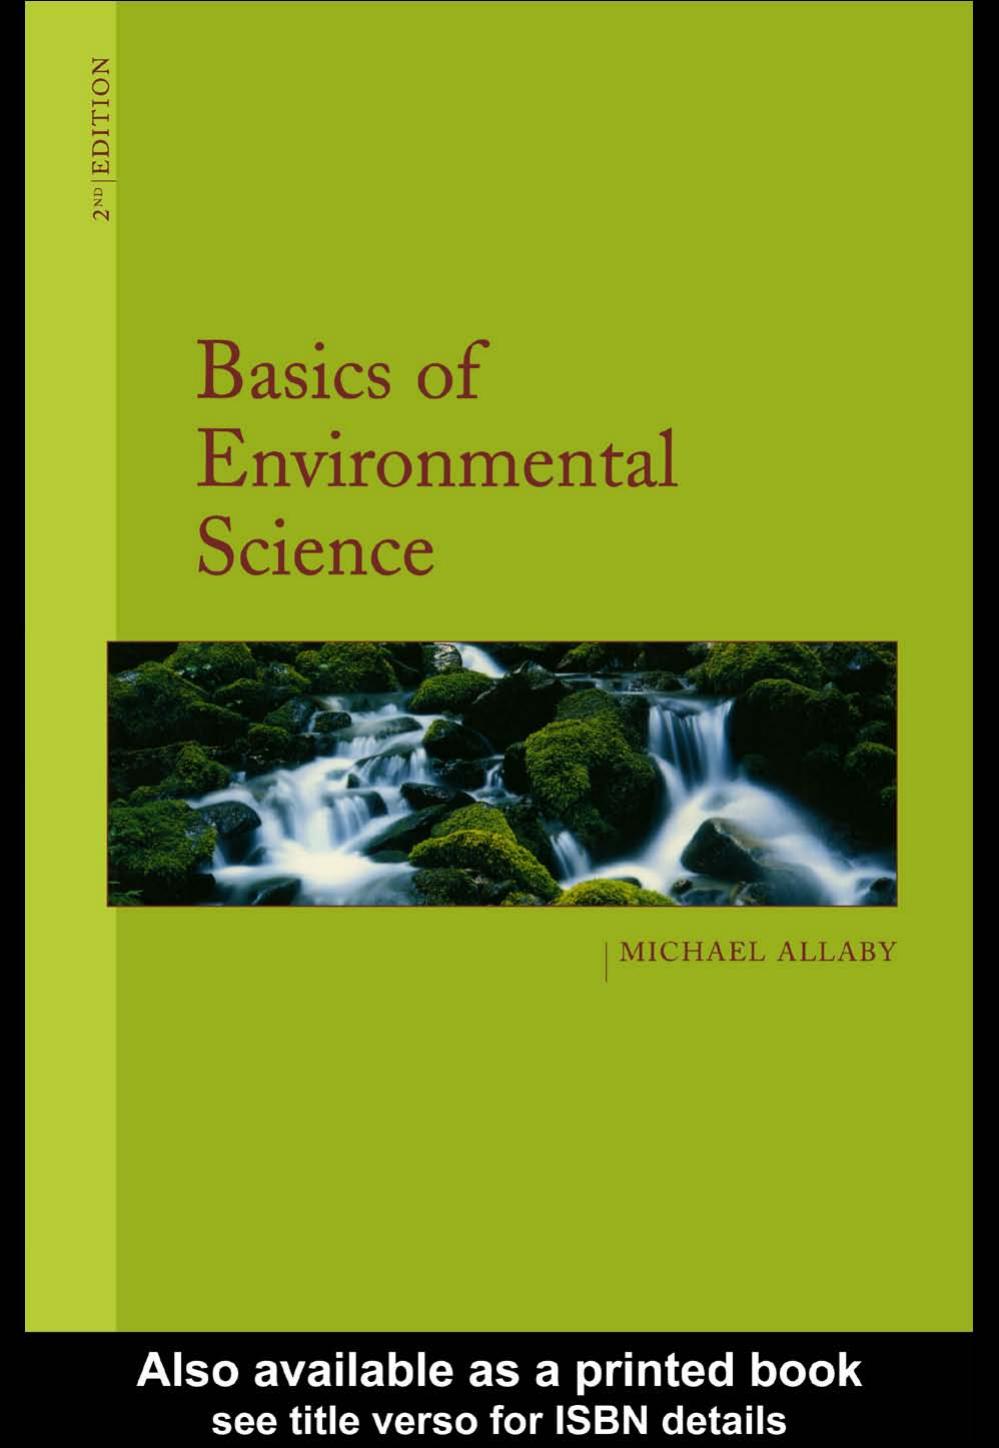 Basics of Environmental Science 2002